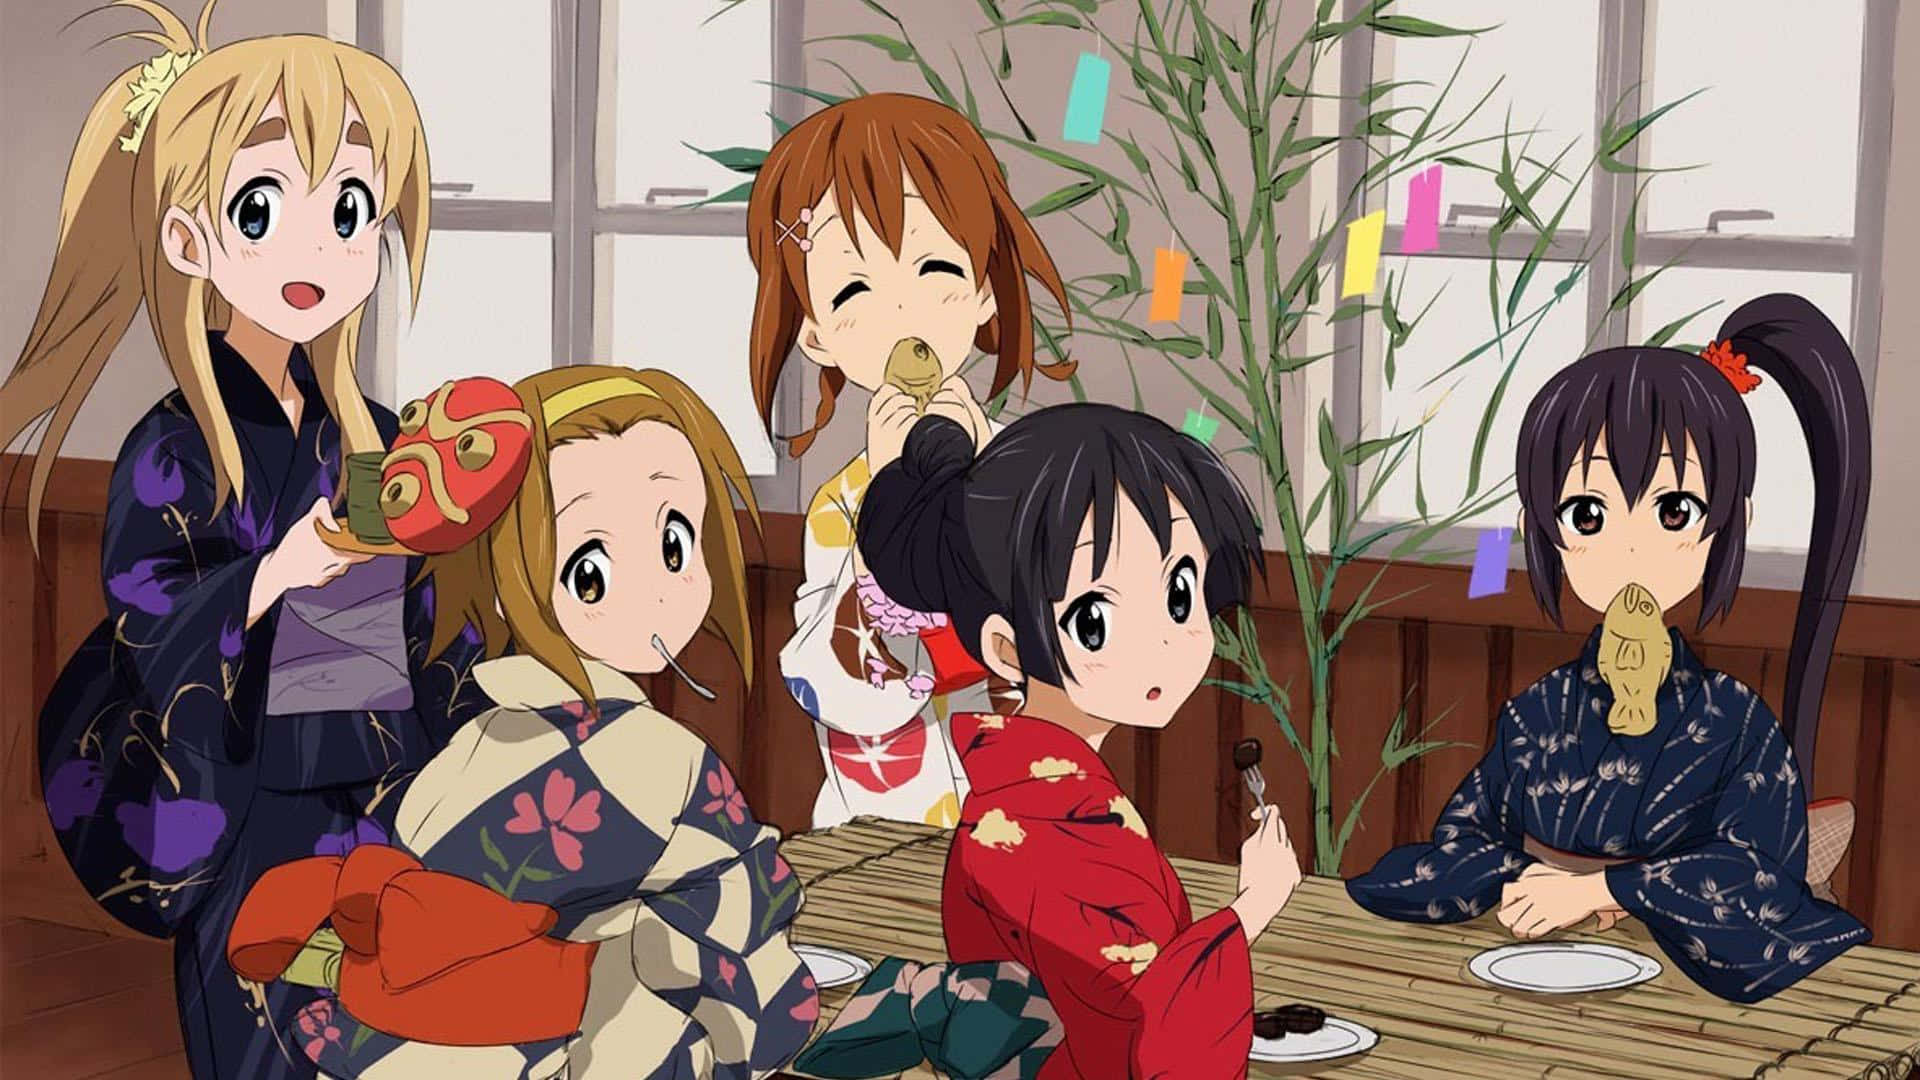 From left to right, Mio Akiyama, Ui Hirasawa, Yui Hirasawa, and Ritsu Tainaka make up the main girls of the Japanese Anime "K-ON!"